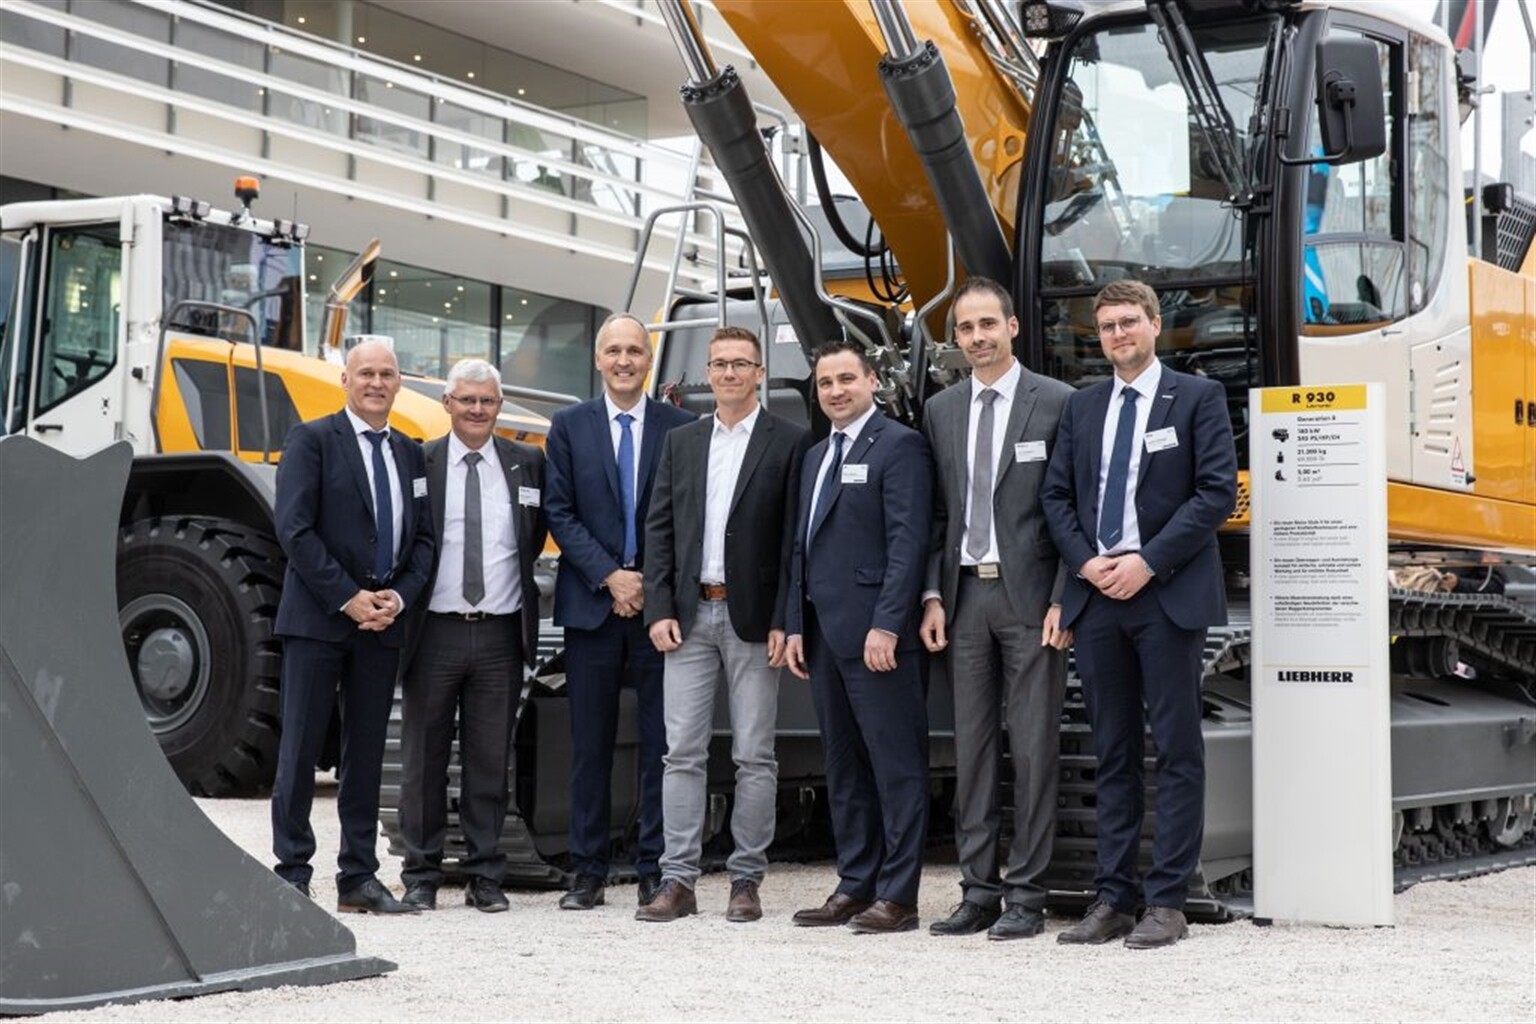 Five New Generation 8 crawler excavators for Meyer Erdbau GmbH & Co. KG